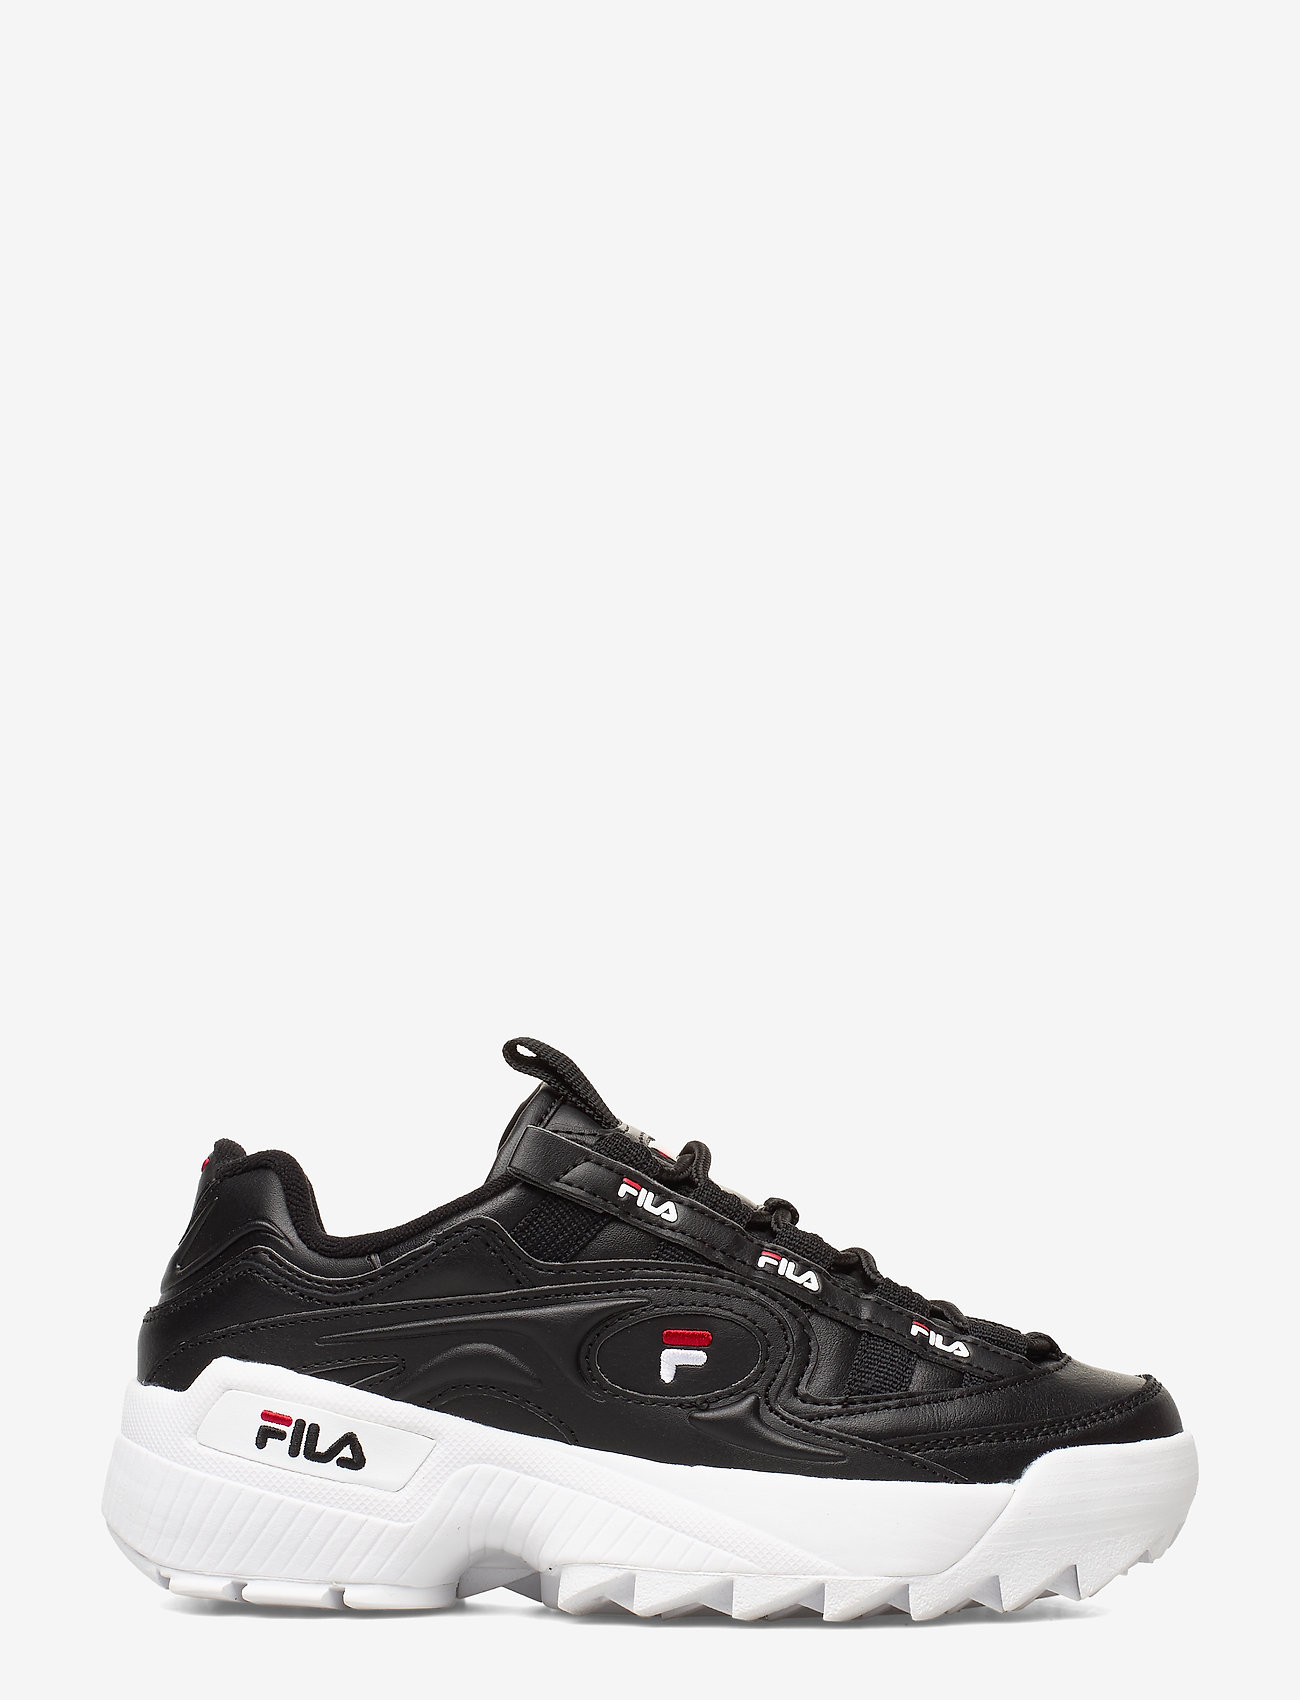 fila chunky sneakers black